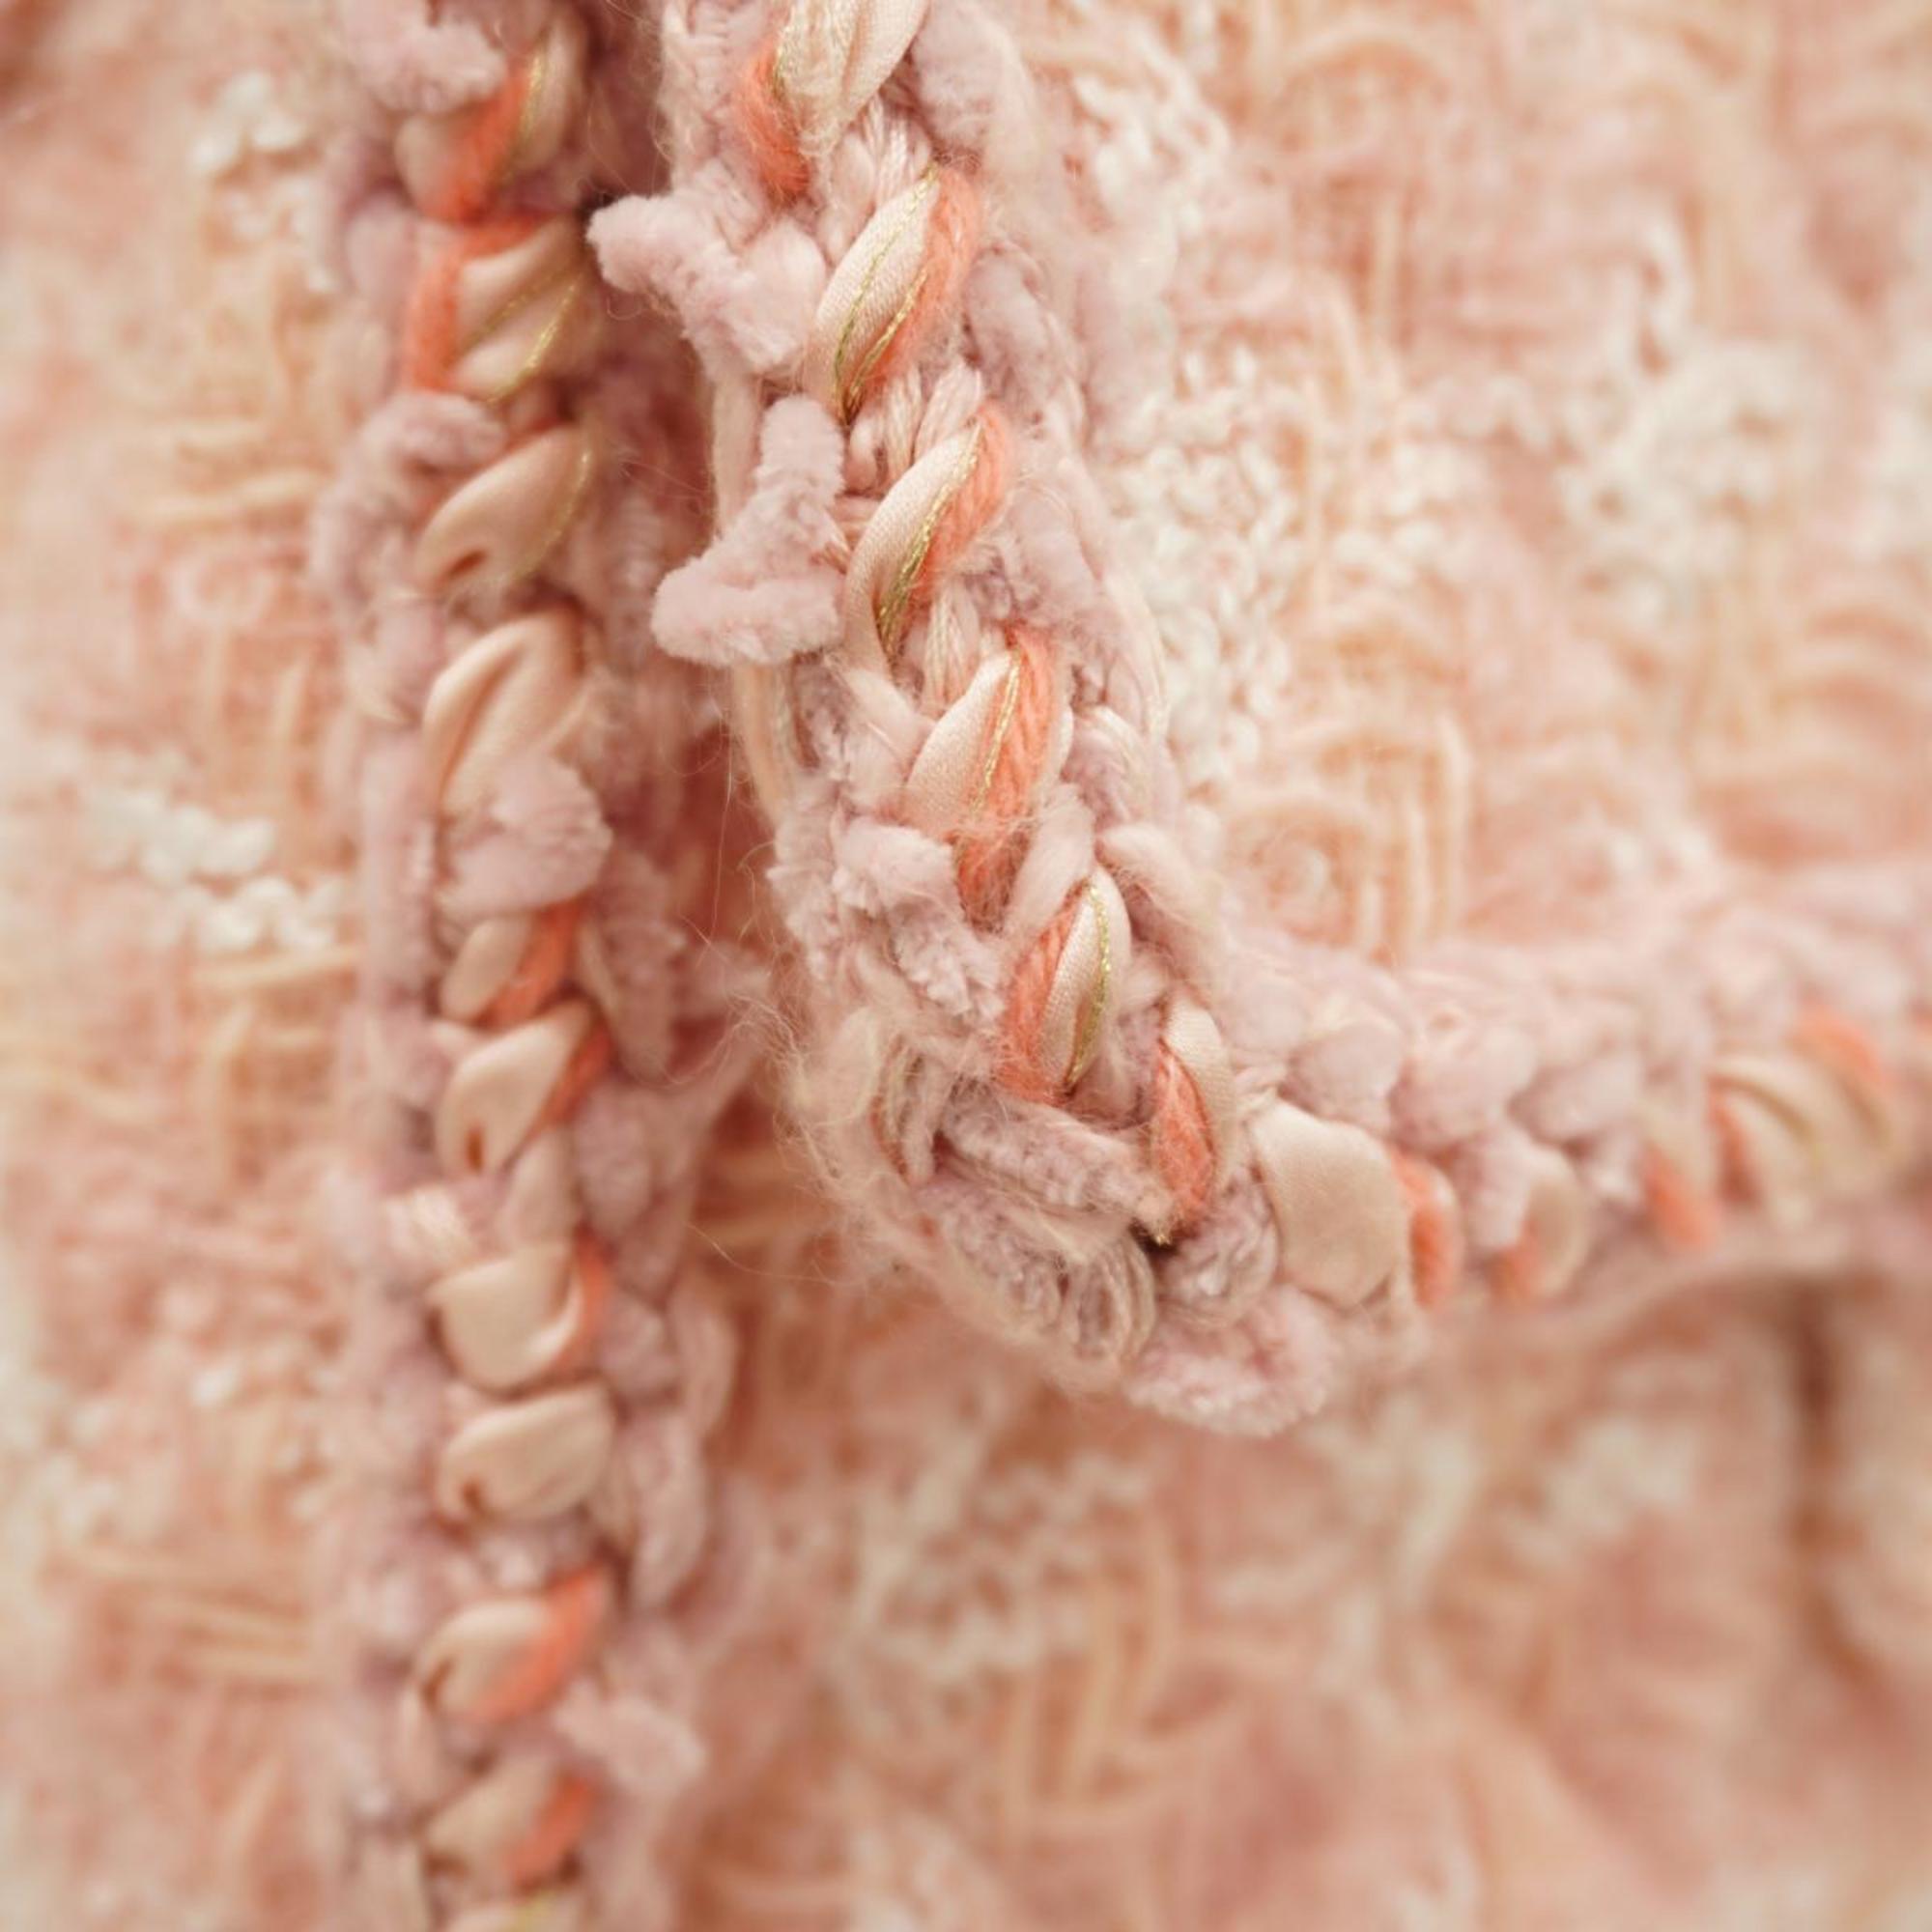 Chanel Shoulder Bag Matelasse 2.55 W Chain Tweed Pink Women's